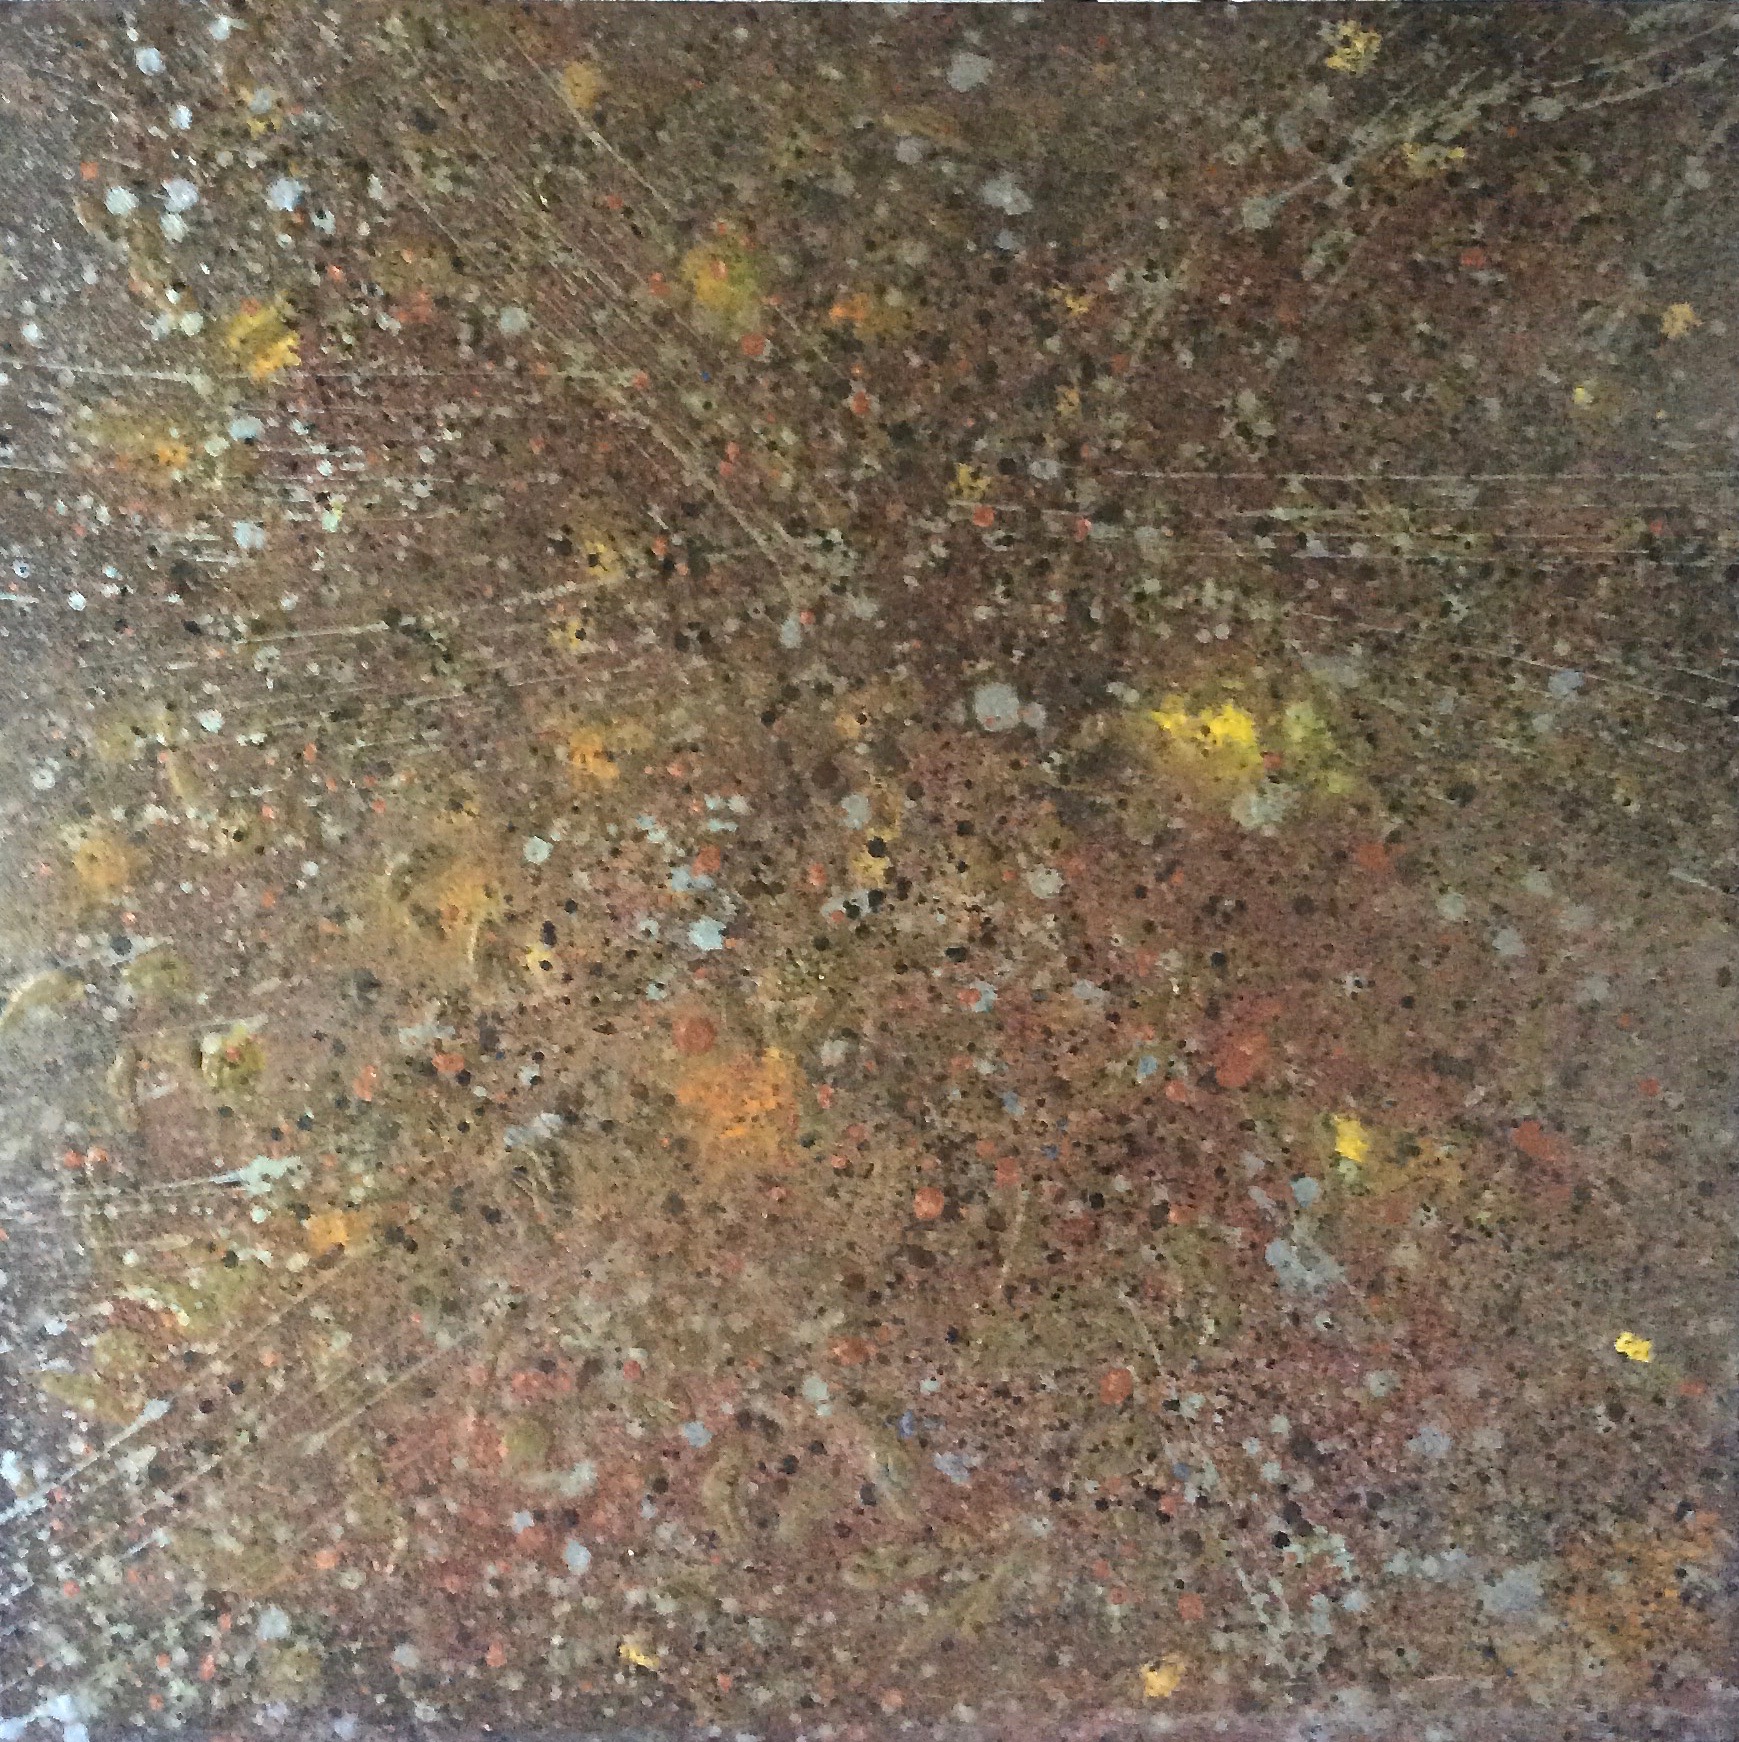  Earth, 2014  24 x 24 inches  Acrylic on canvas 